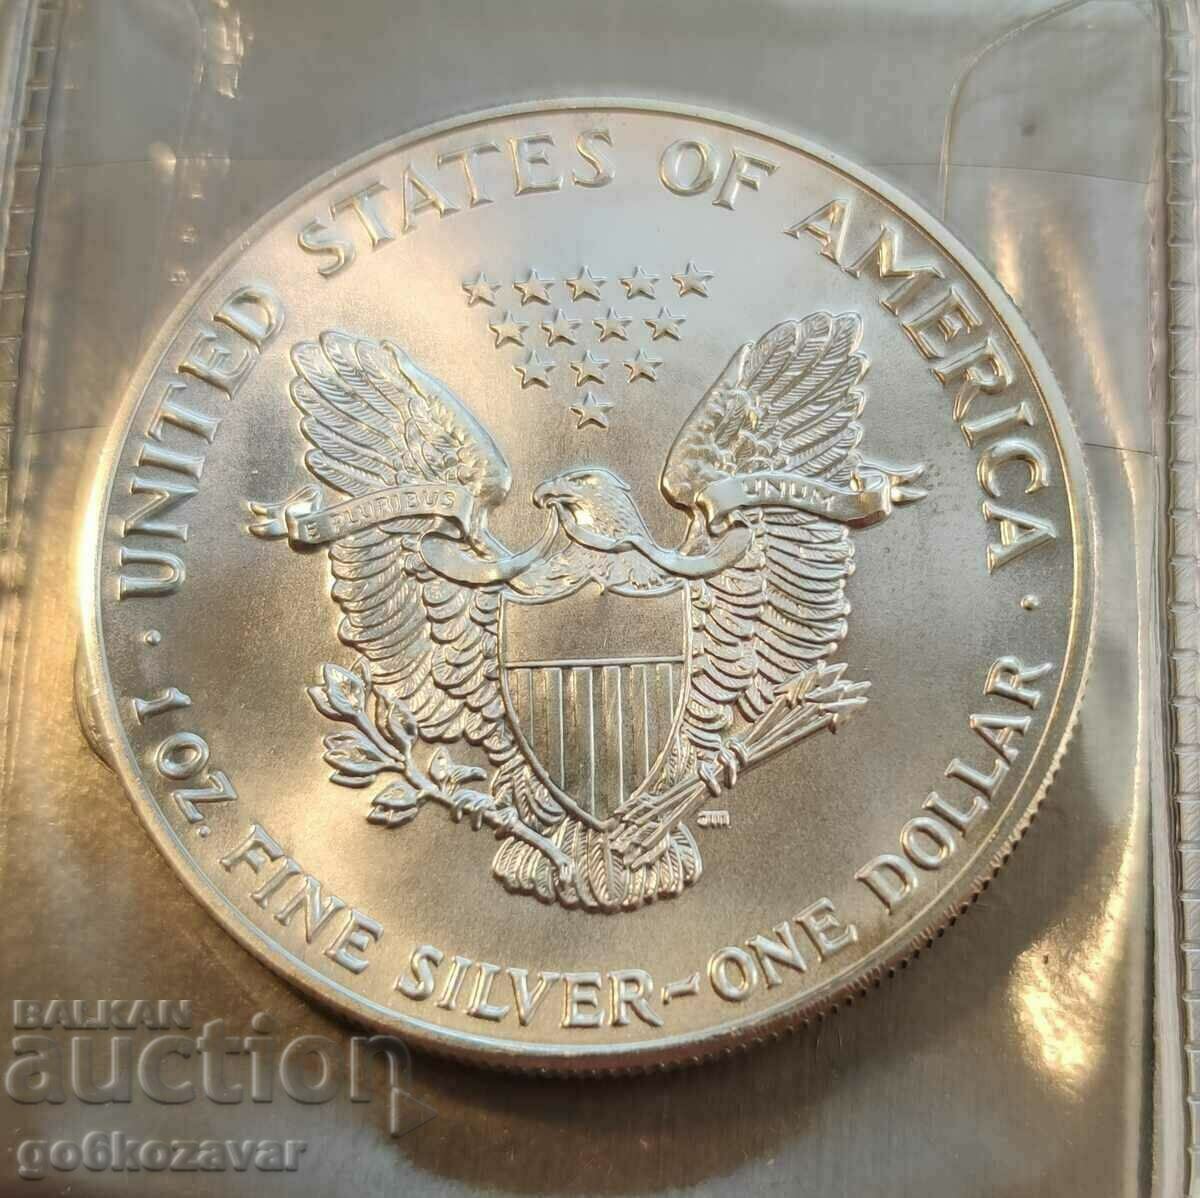 American Eagle 1 oz Silver 9.999 Ounce 1990 UNC Proof